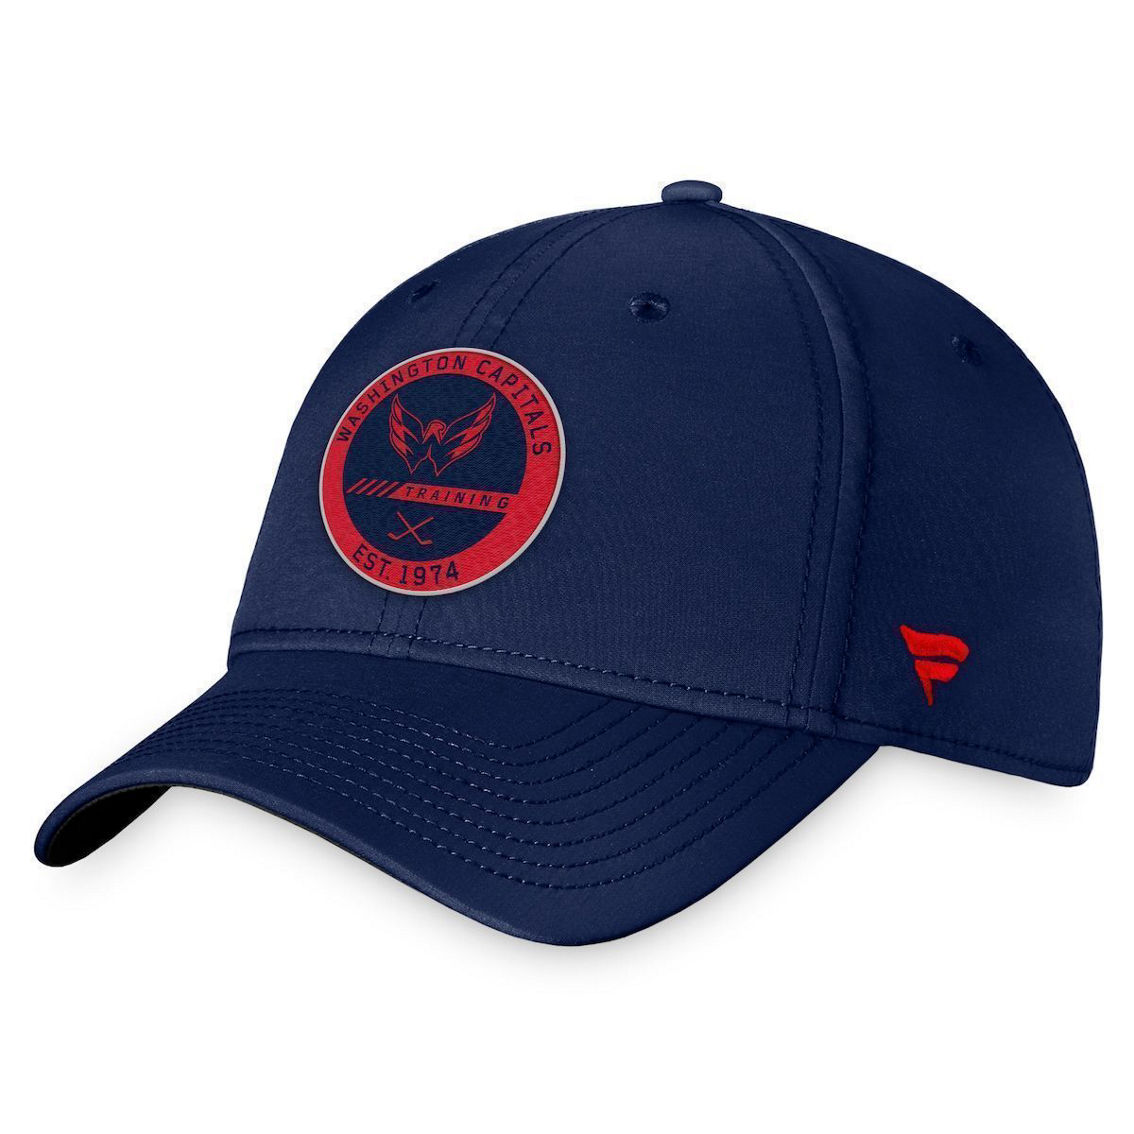 Fanatics Branded Men's Navy Washington Capitals Authentic Pro Team Training Camp Practice Flex Hat - Image 2 of 4